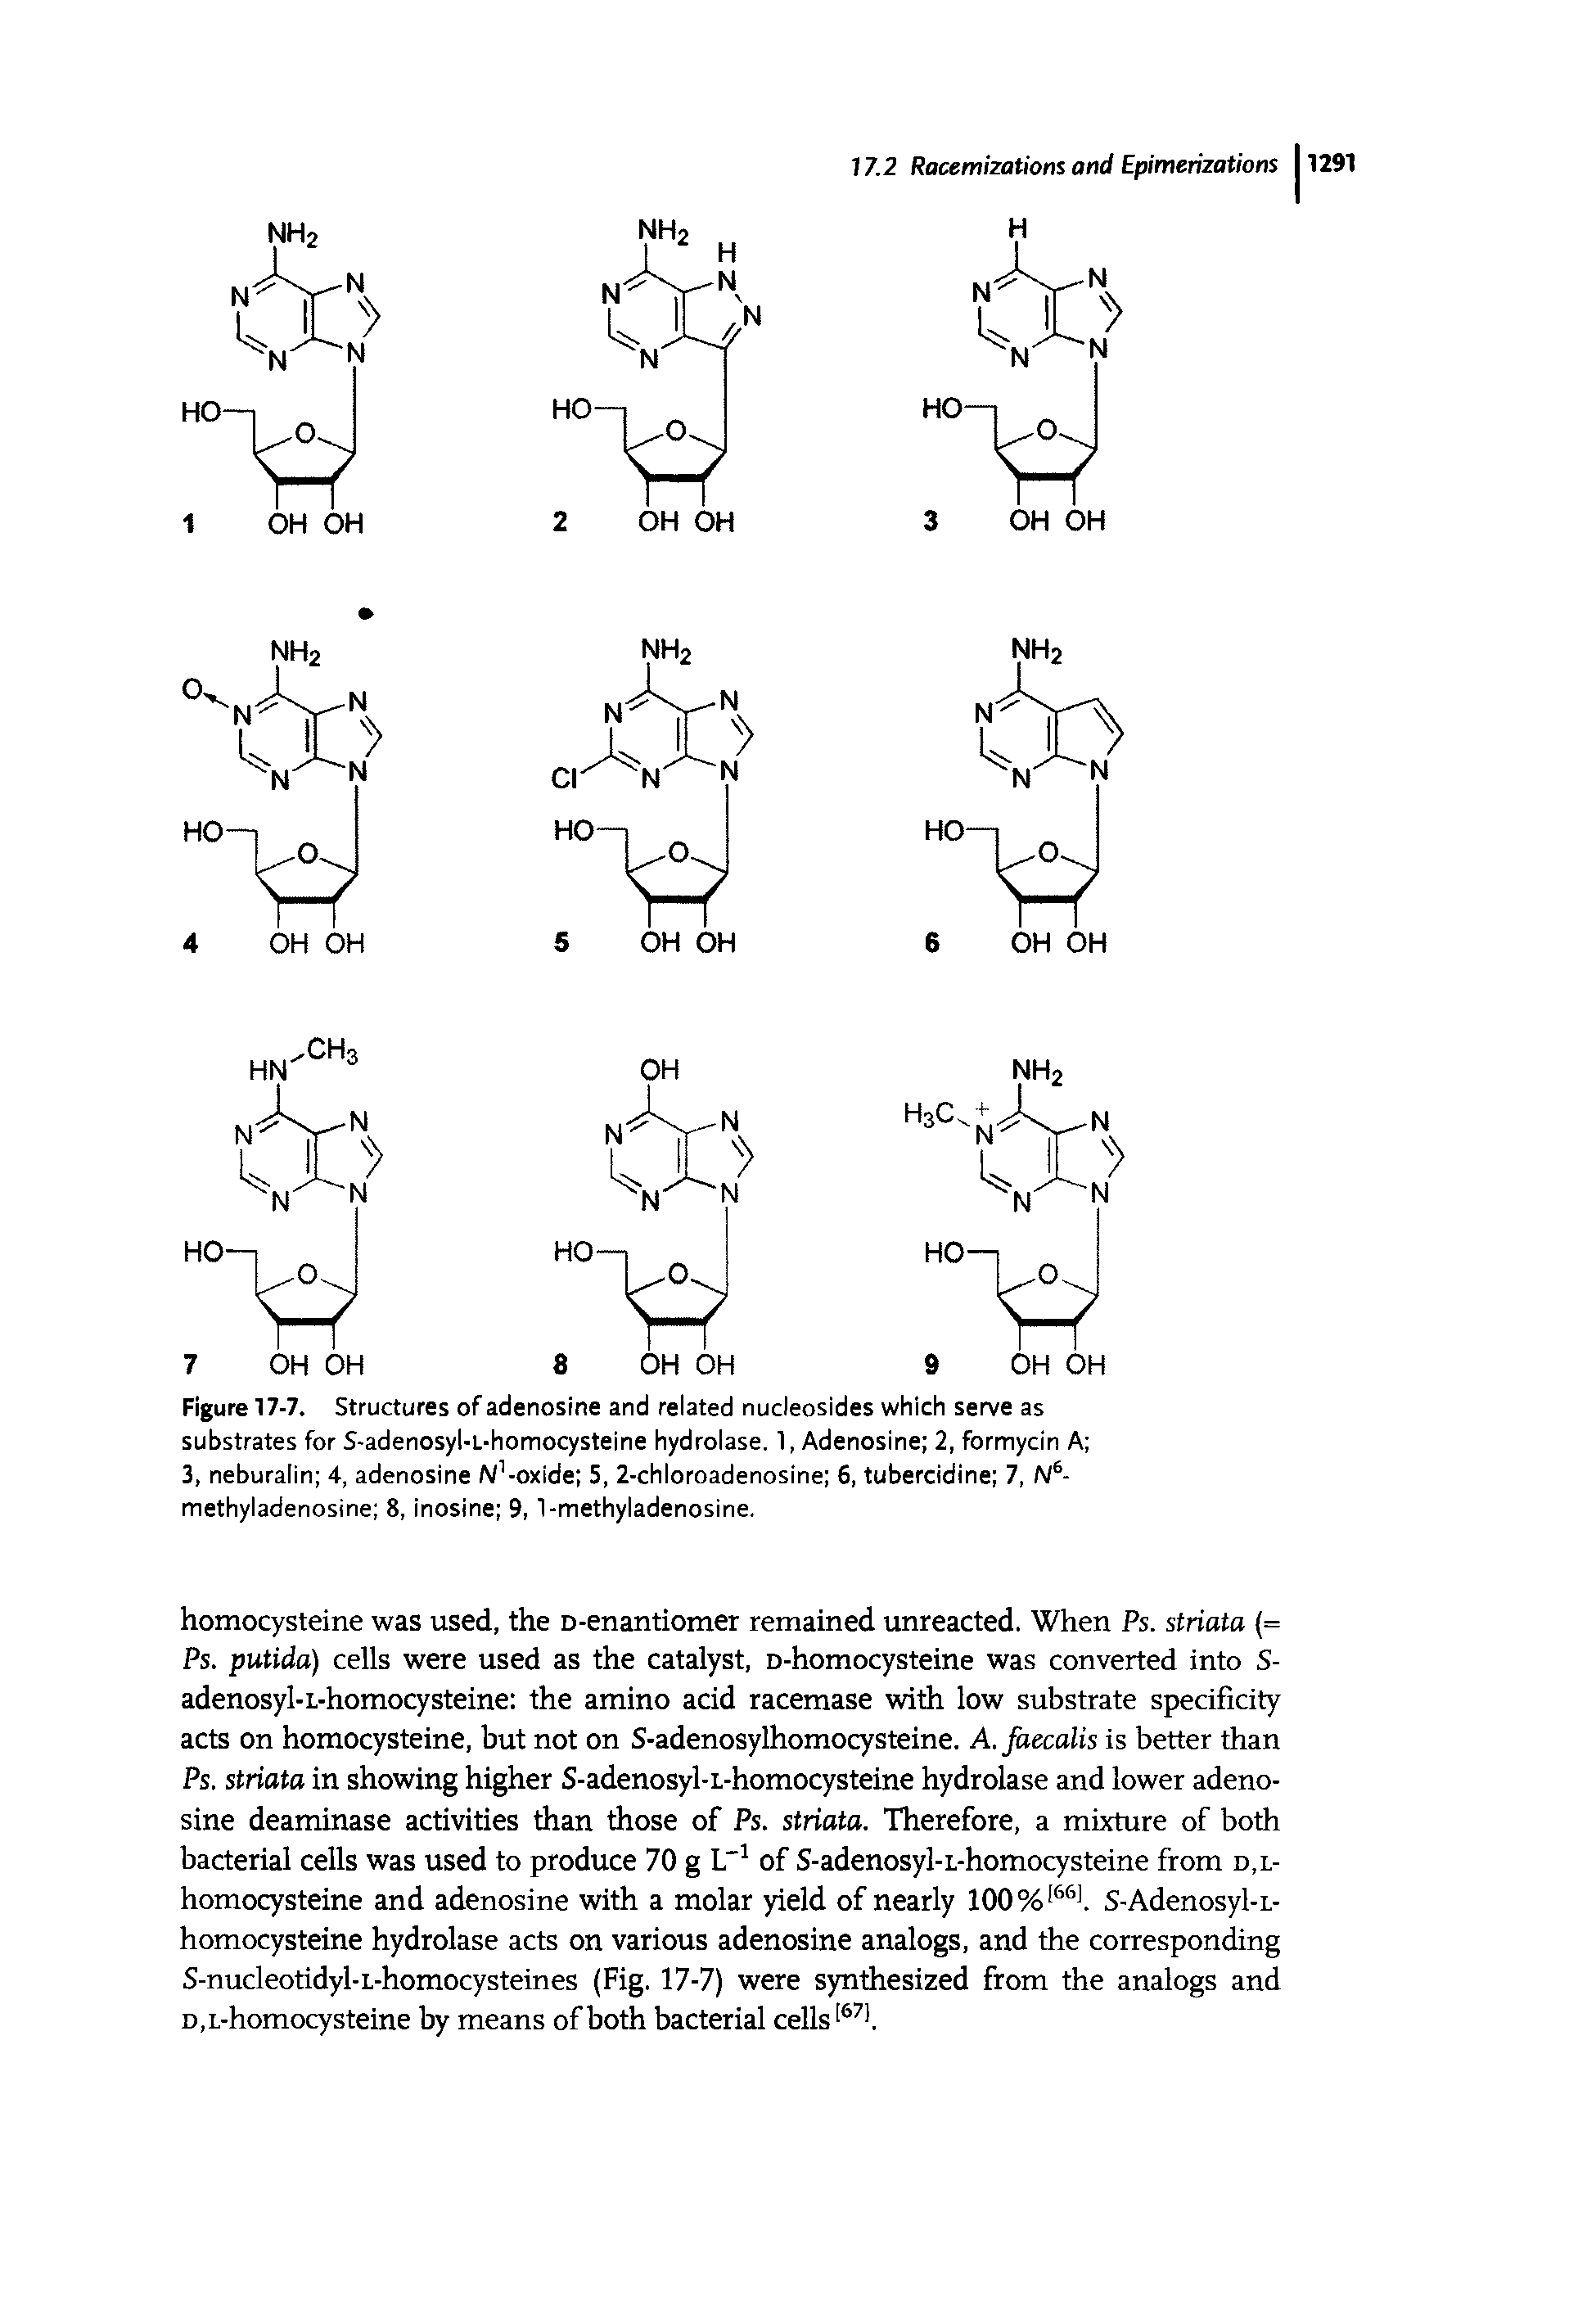 Figure 17-7. Structures of adenosine and related nucleosides which serve as substrates for S-adenosyl-L-homocysteine hydrolase. 1, Adenosine 2, formycin A 3, neburalin 4, adenosine Af-oxide 5, 2-chloroadenosine 6, tubercidine 7, N6-methyladenosine 8, inosine 9, 1-methyladenosine.